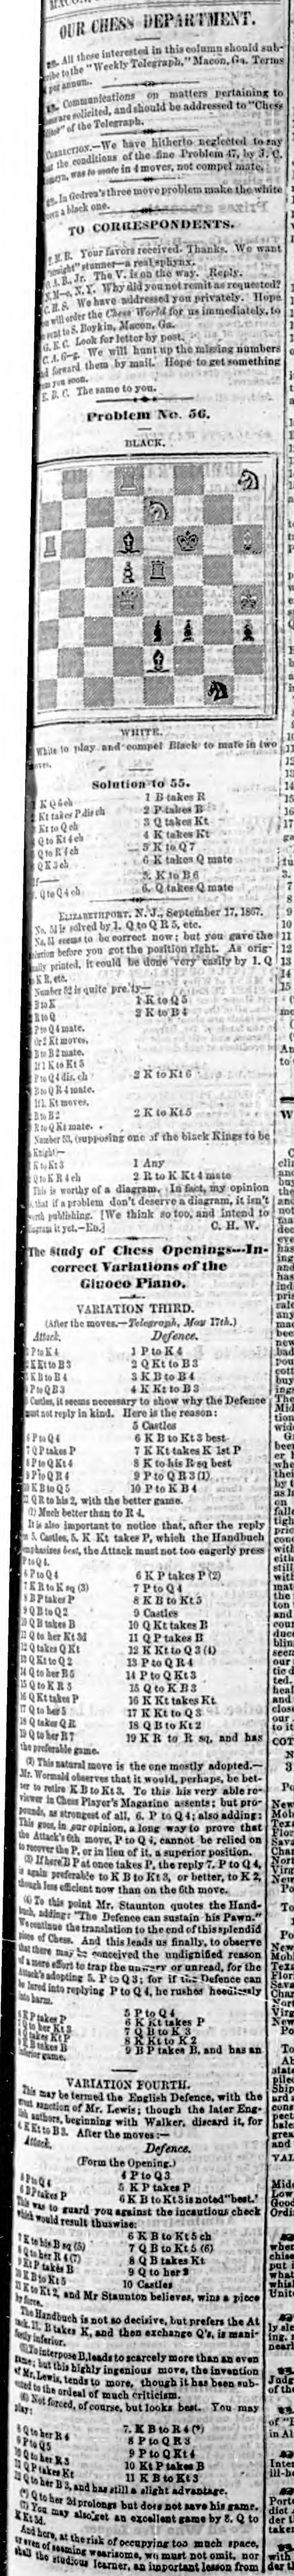 1867.10.04-01 Macon Georgia Weekly Telegraph.jpg